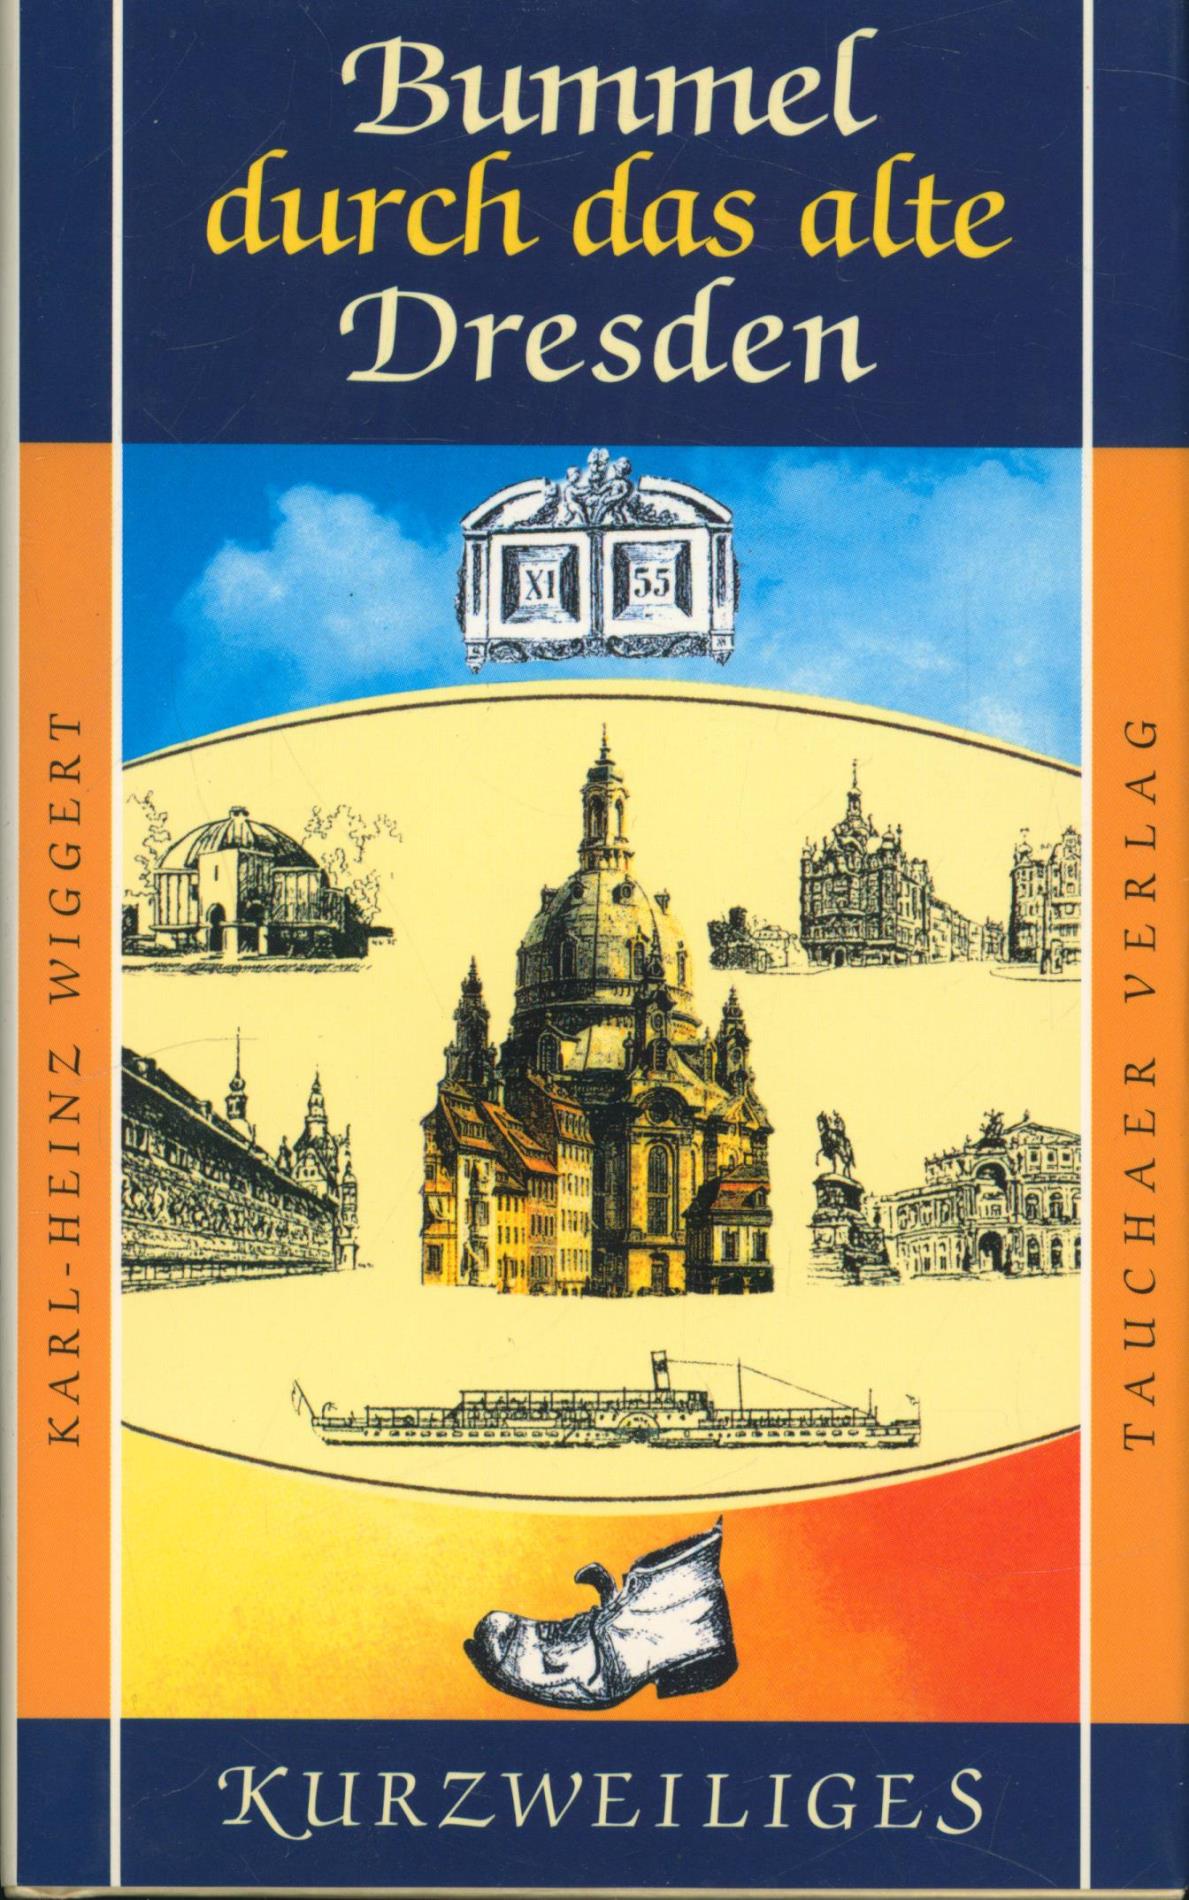 Bummel durch das alte Dresden (Kurzweiliges) - Karl-Heinz Wiggert